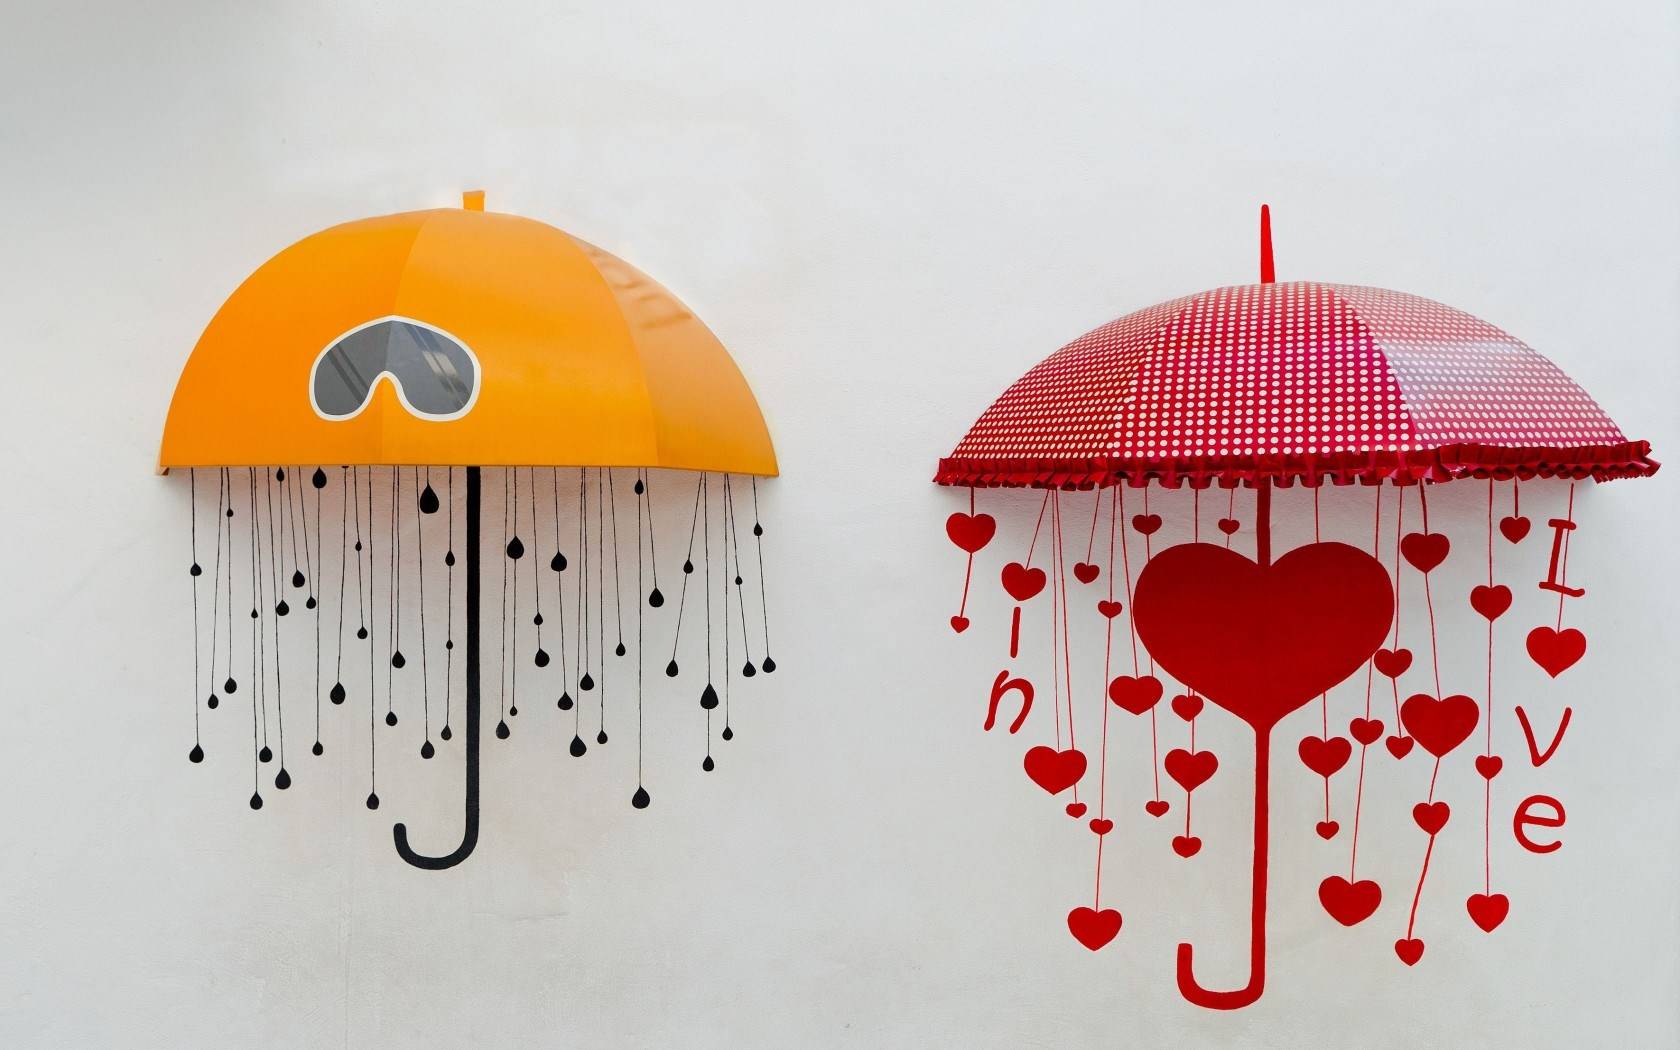 mood-umbrellas-yellow-red-rain-love-hearts-art-hd-wallpaper.jpg